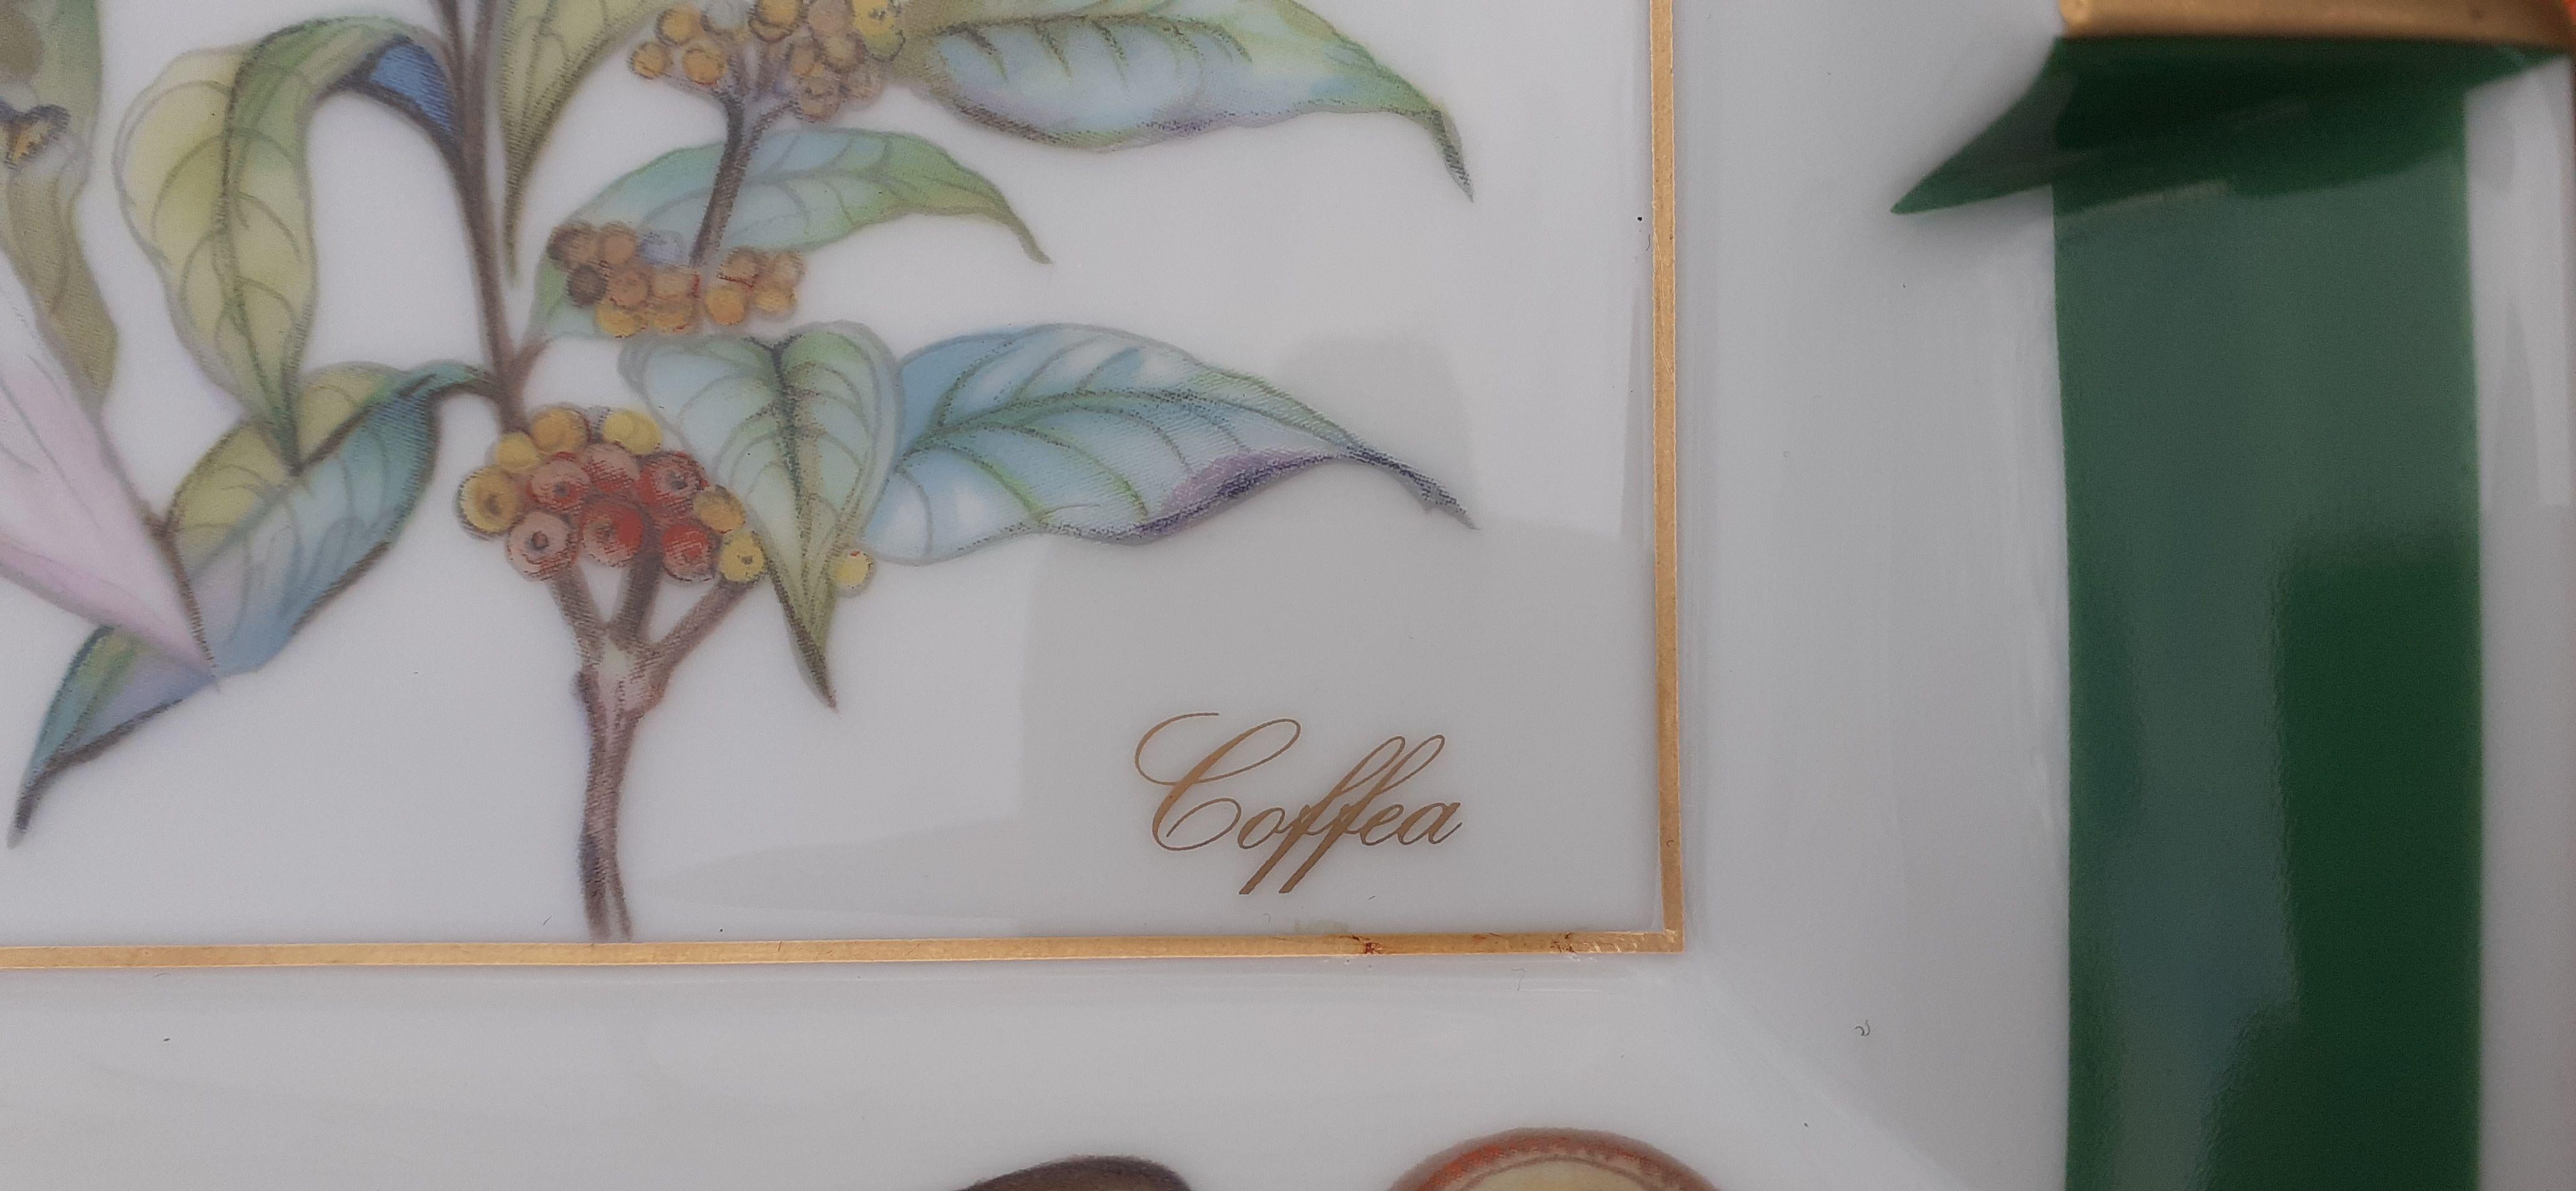 Gray Hermès Cigar Ashtray Change Tray Coffea Coffee Café Print in Porcelain For Sale